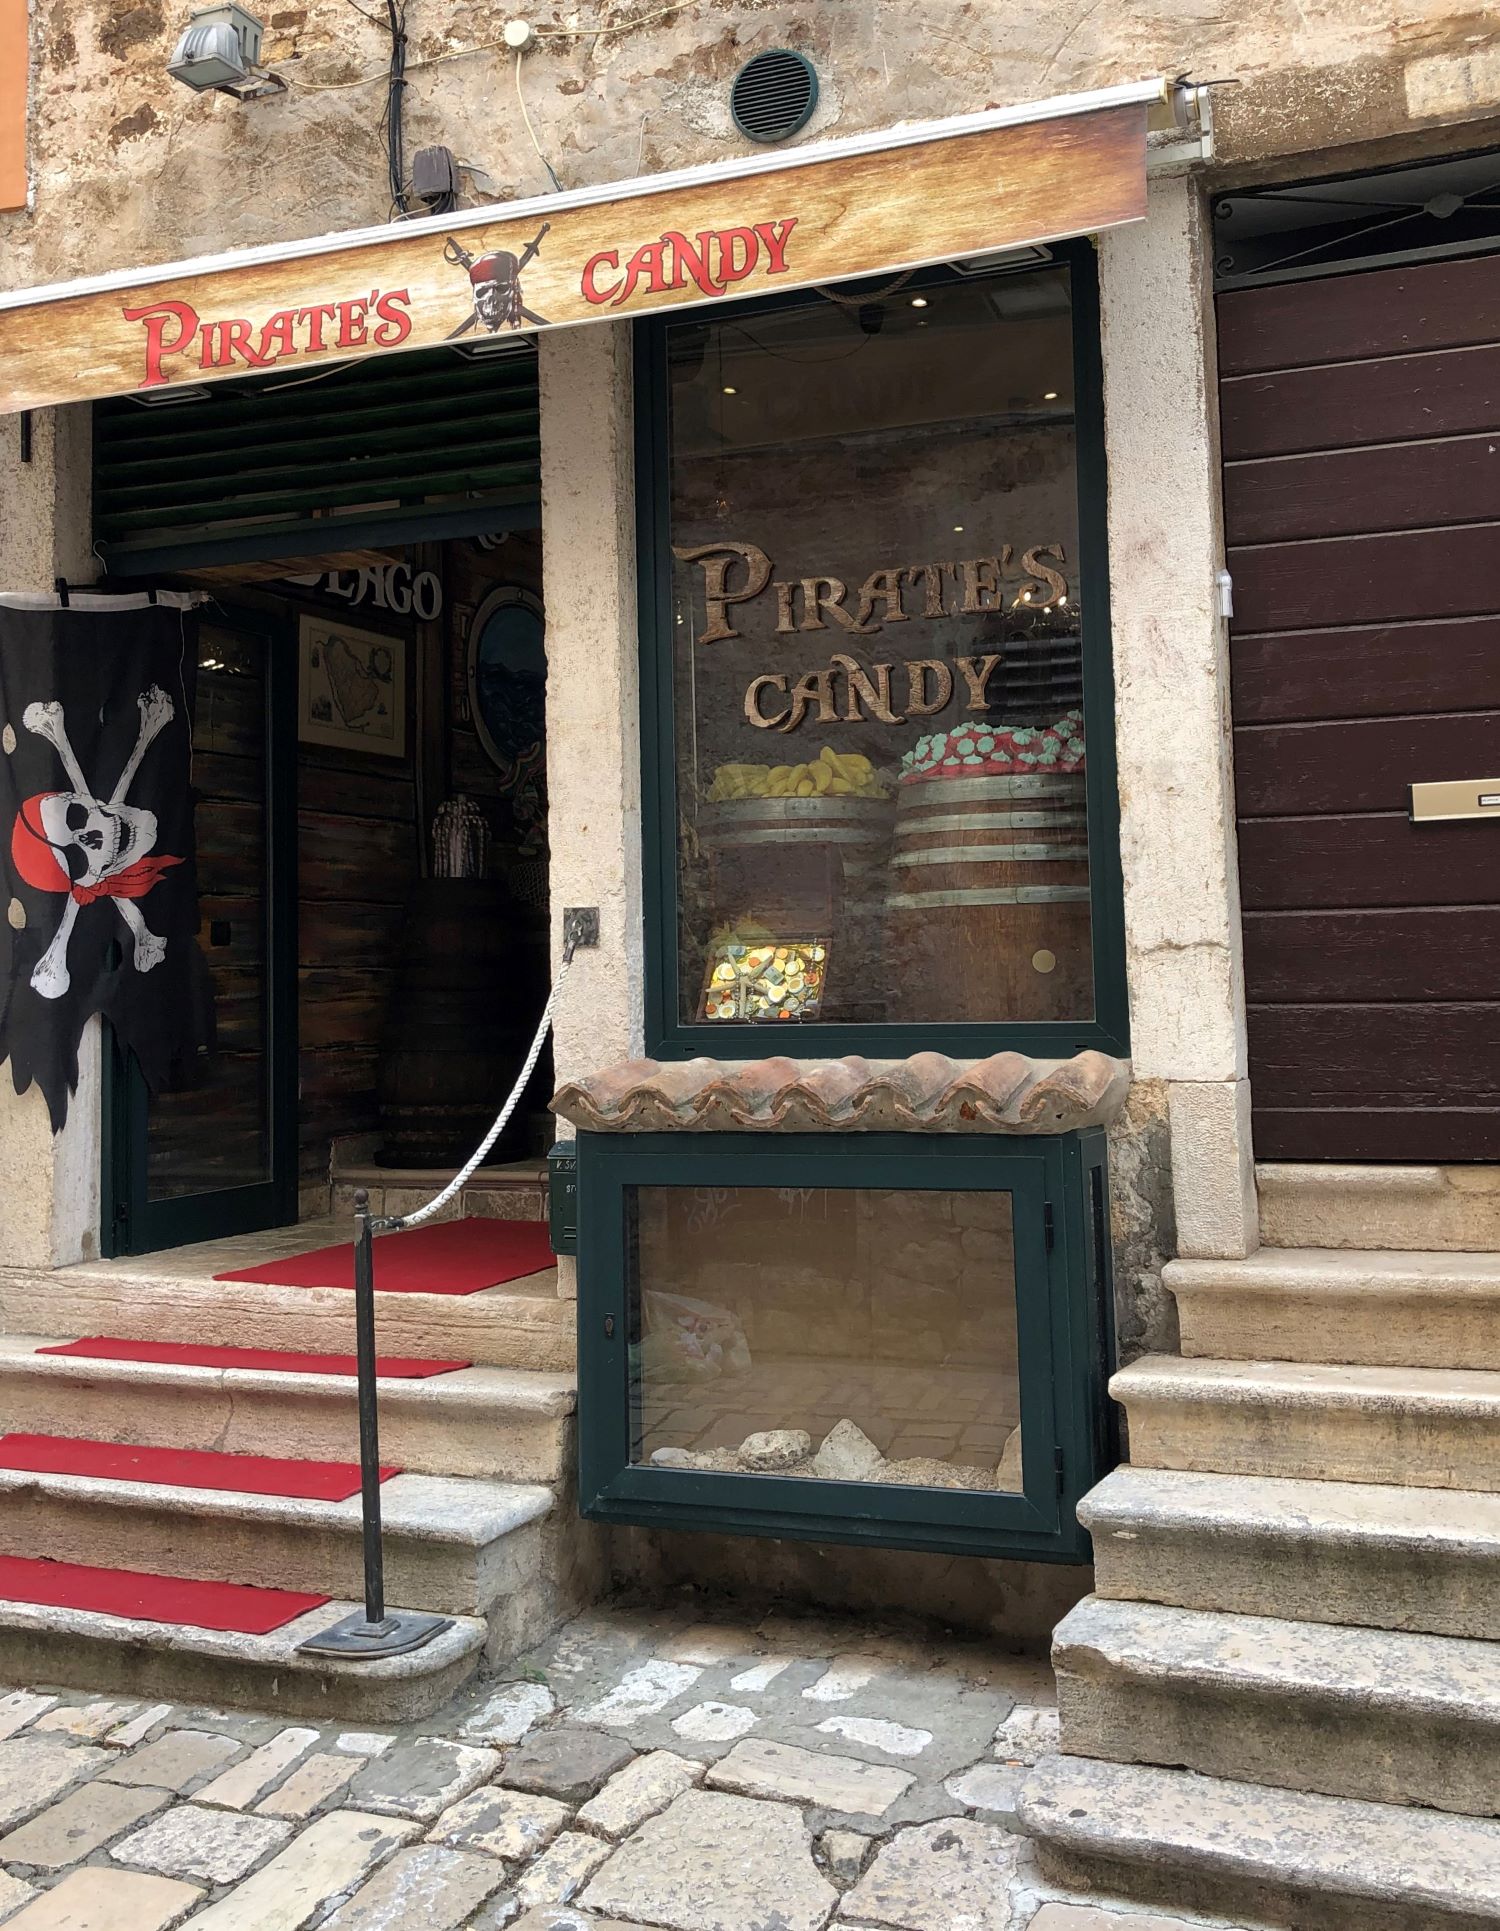 Candy-Shop "Pirate´s candy"  in der Altstadt 